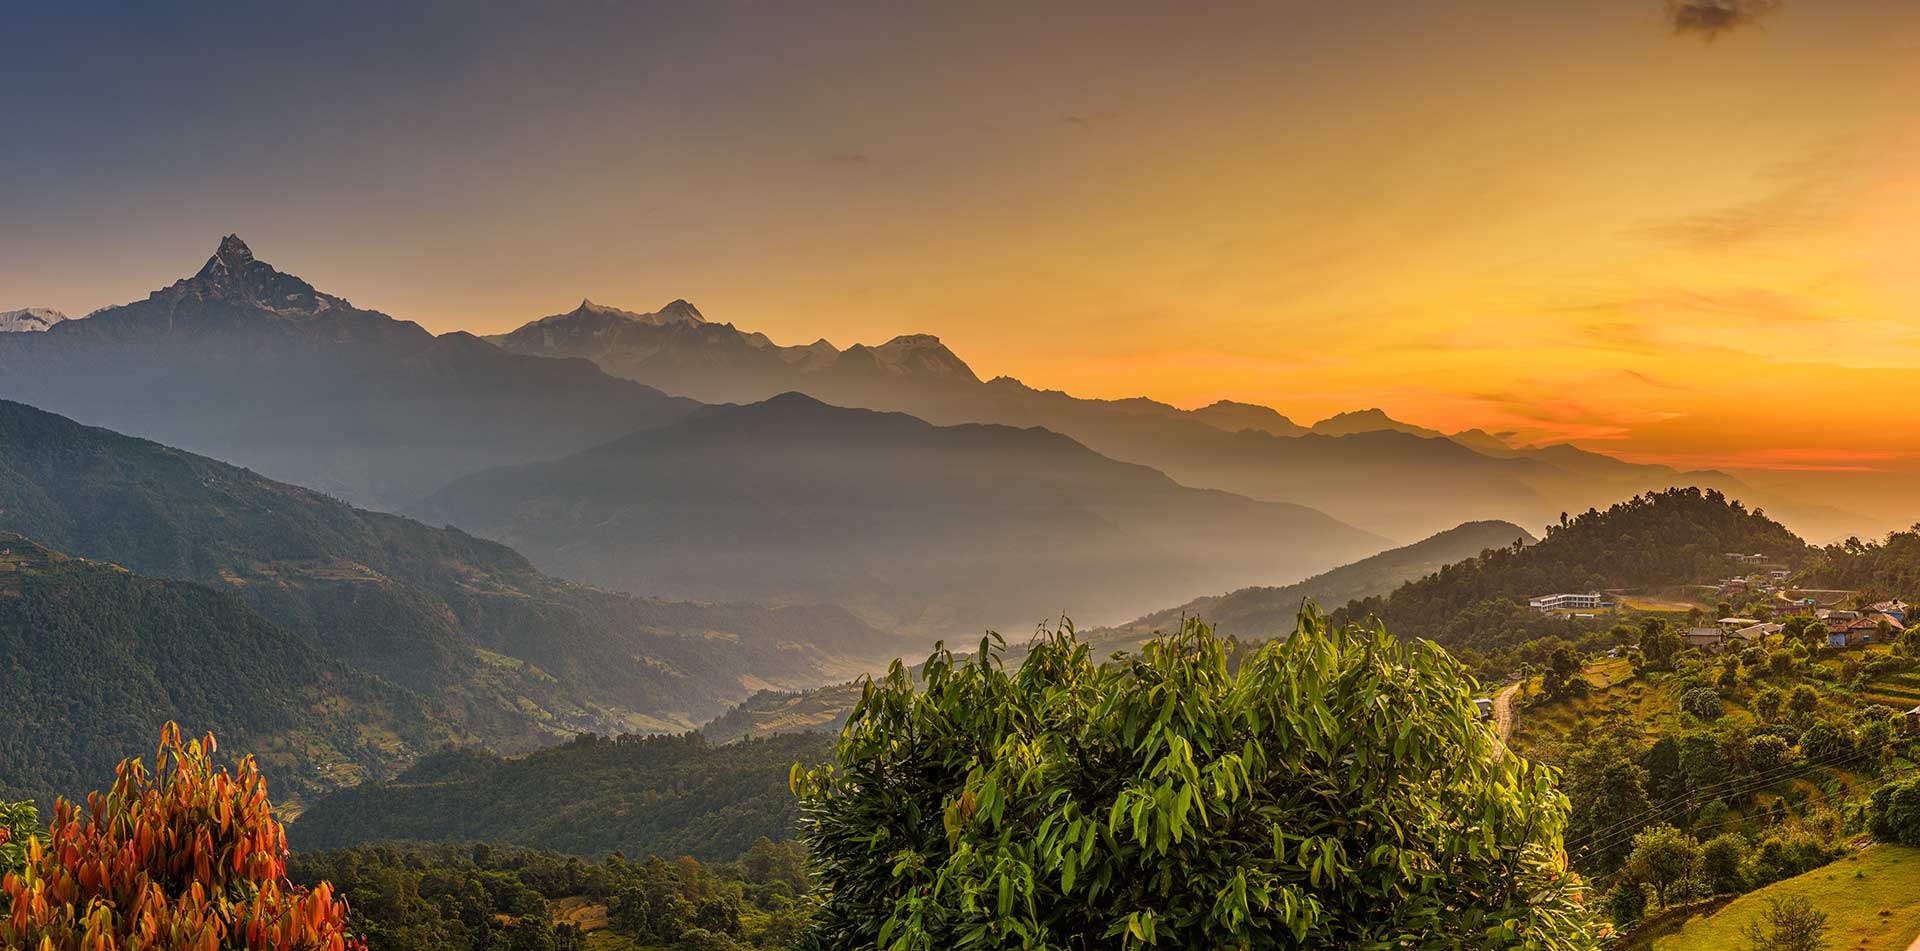 Nepal sunrise over Himalaya mountains